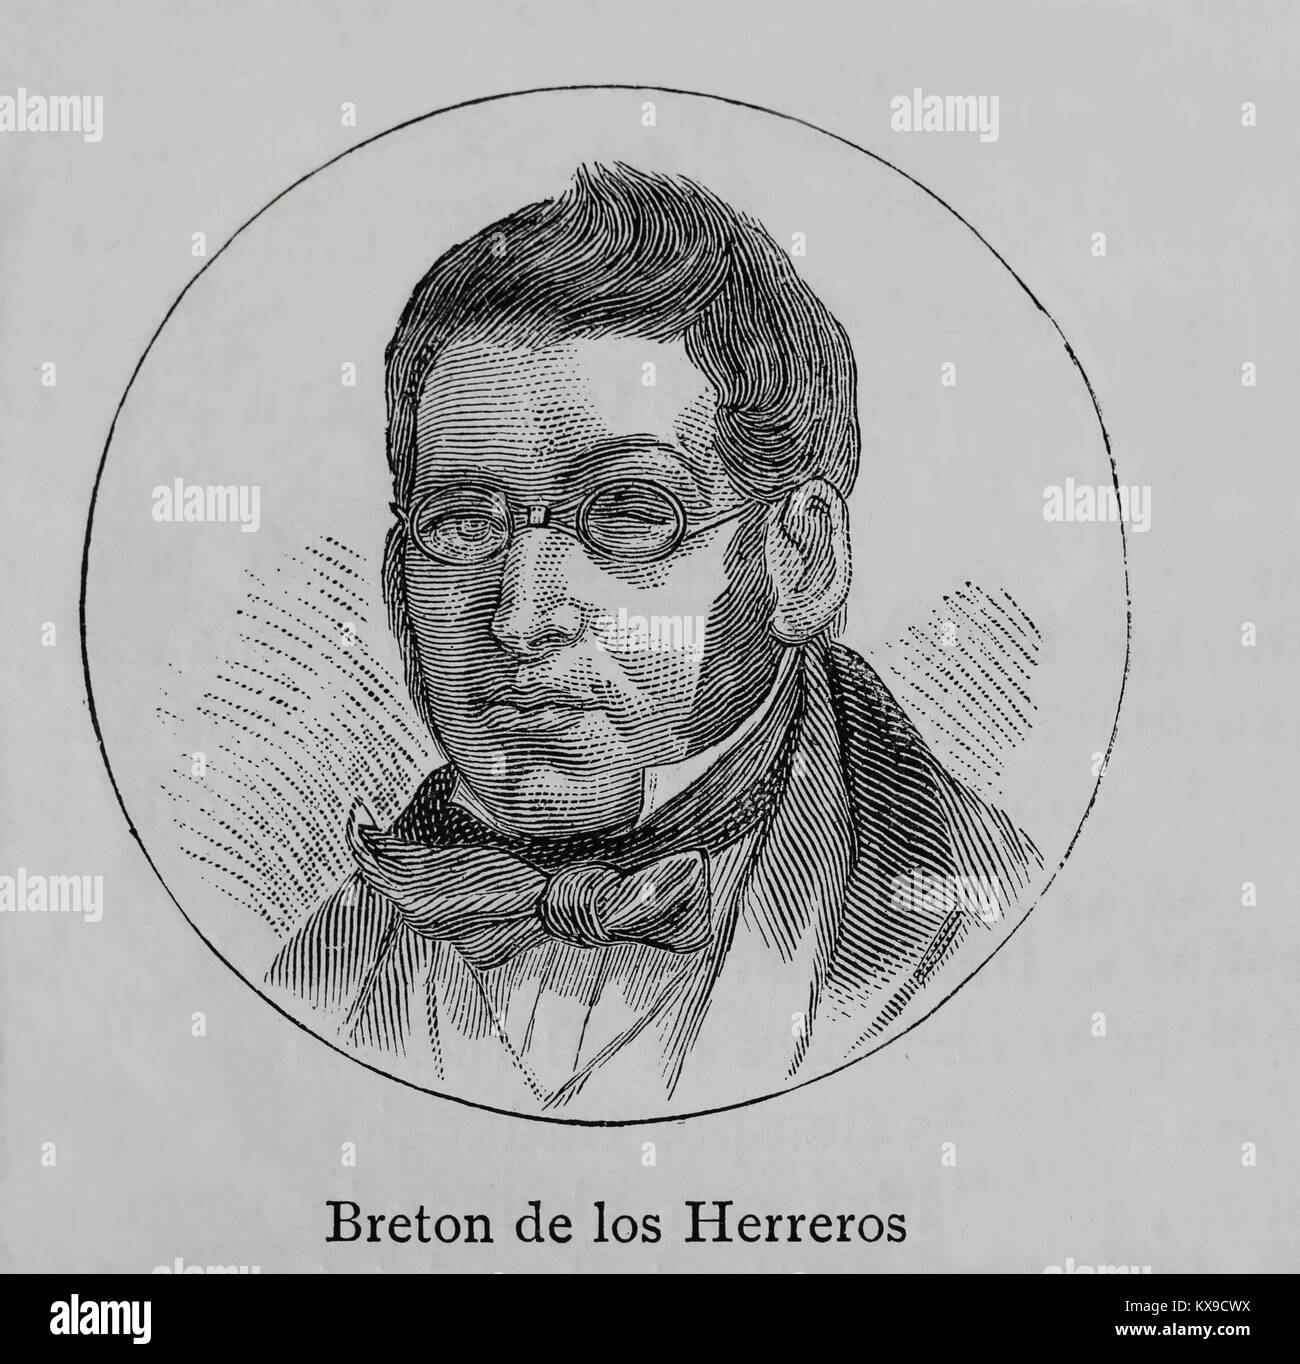 Manuel Breton de los Herreros (1796-1873). Spanish dramatist. Engraving, 1883. Stock Photo